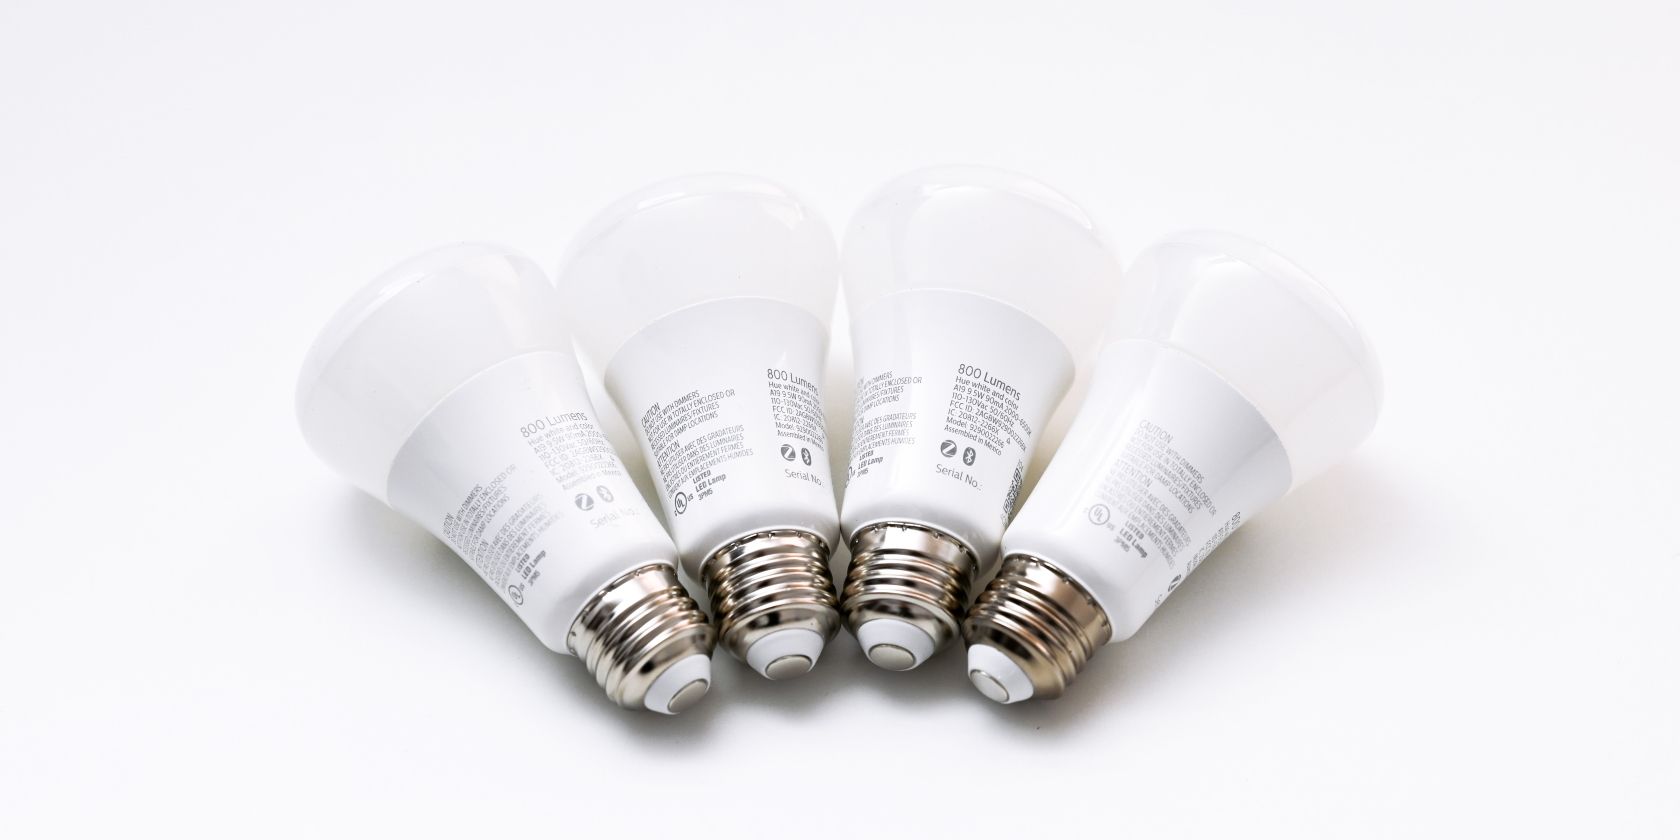 Four Philips Hue Lightbulbs on a White Background